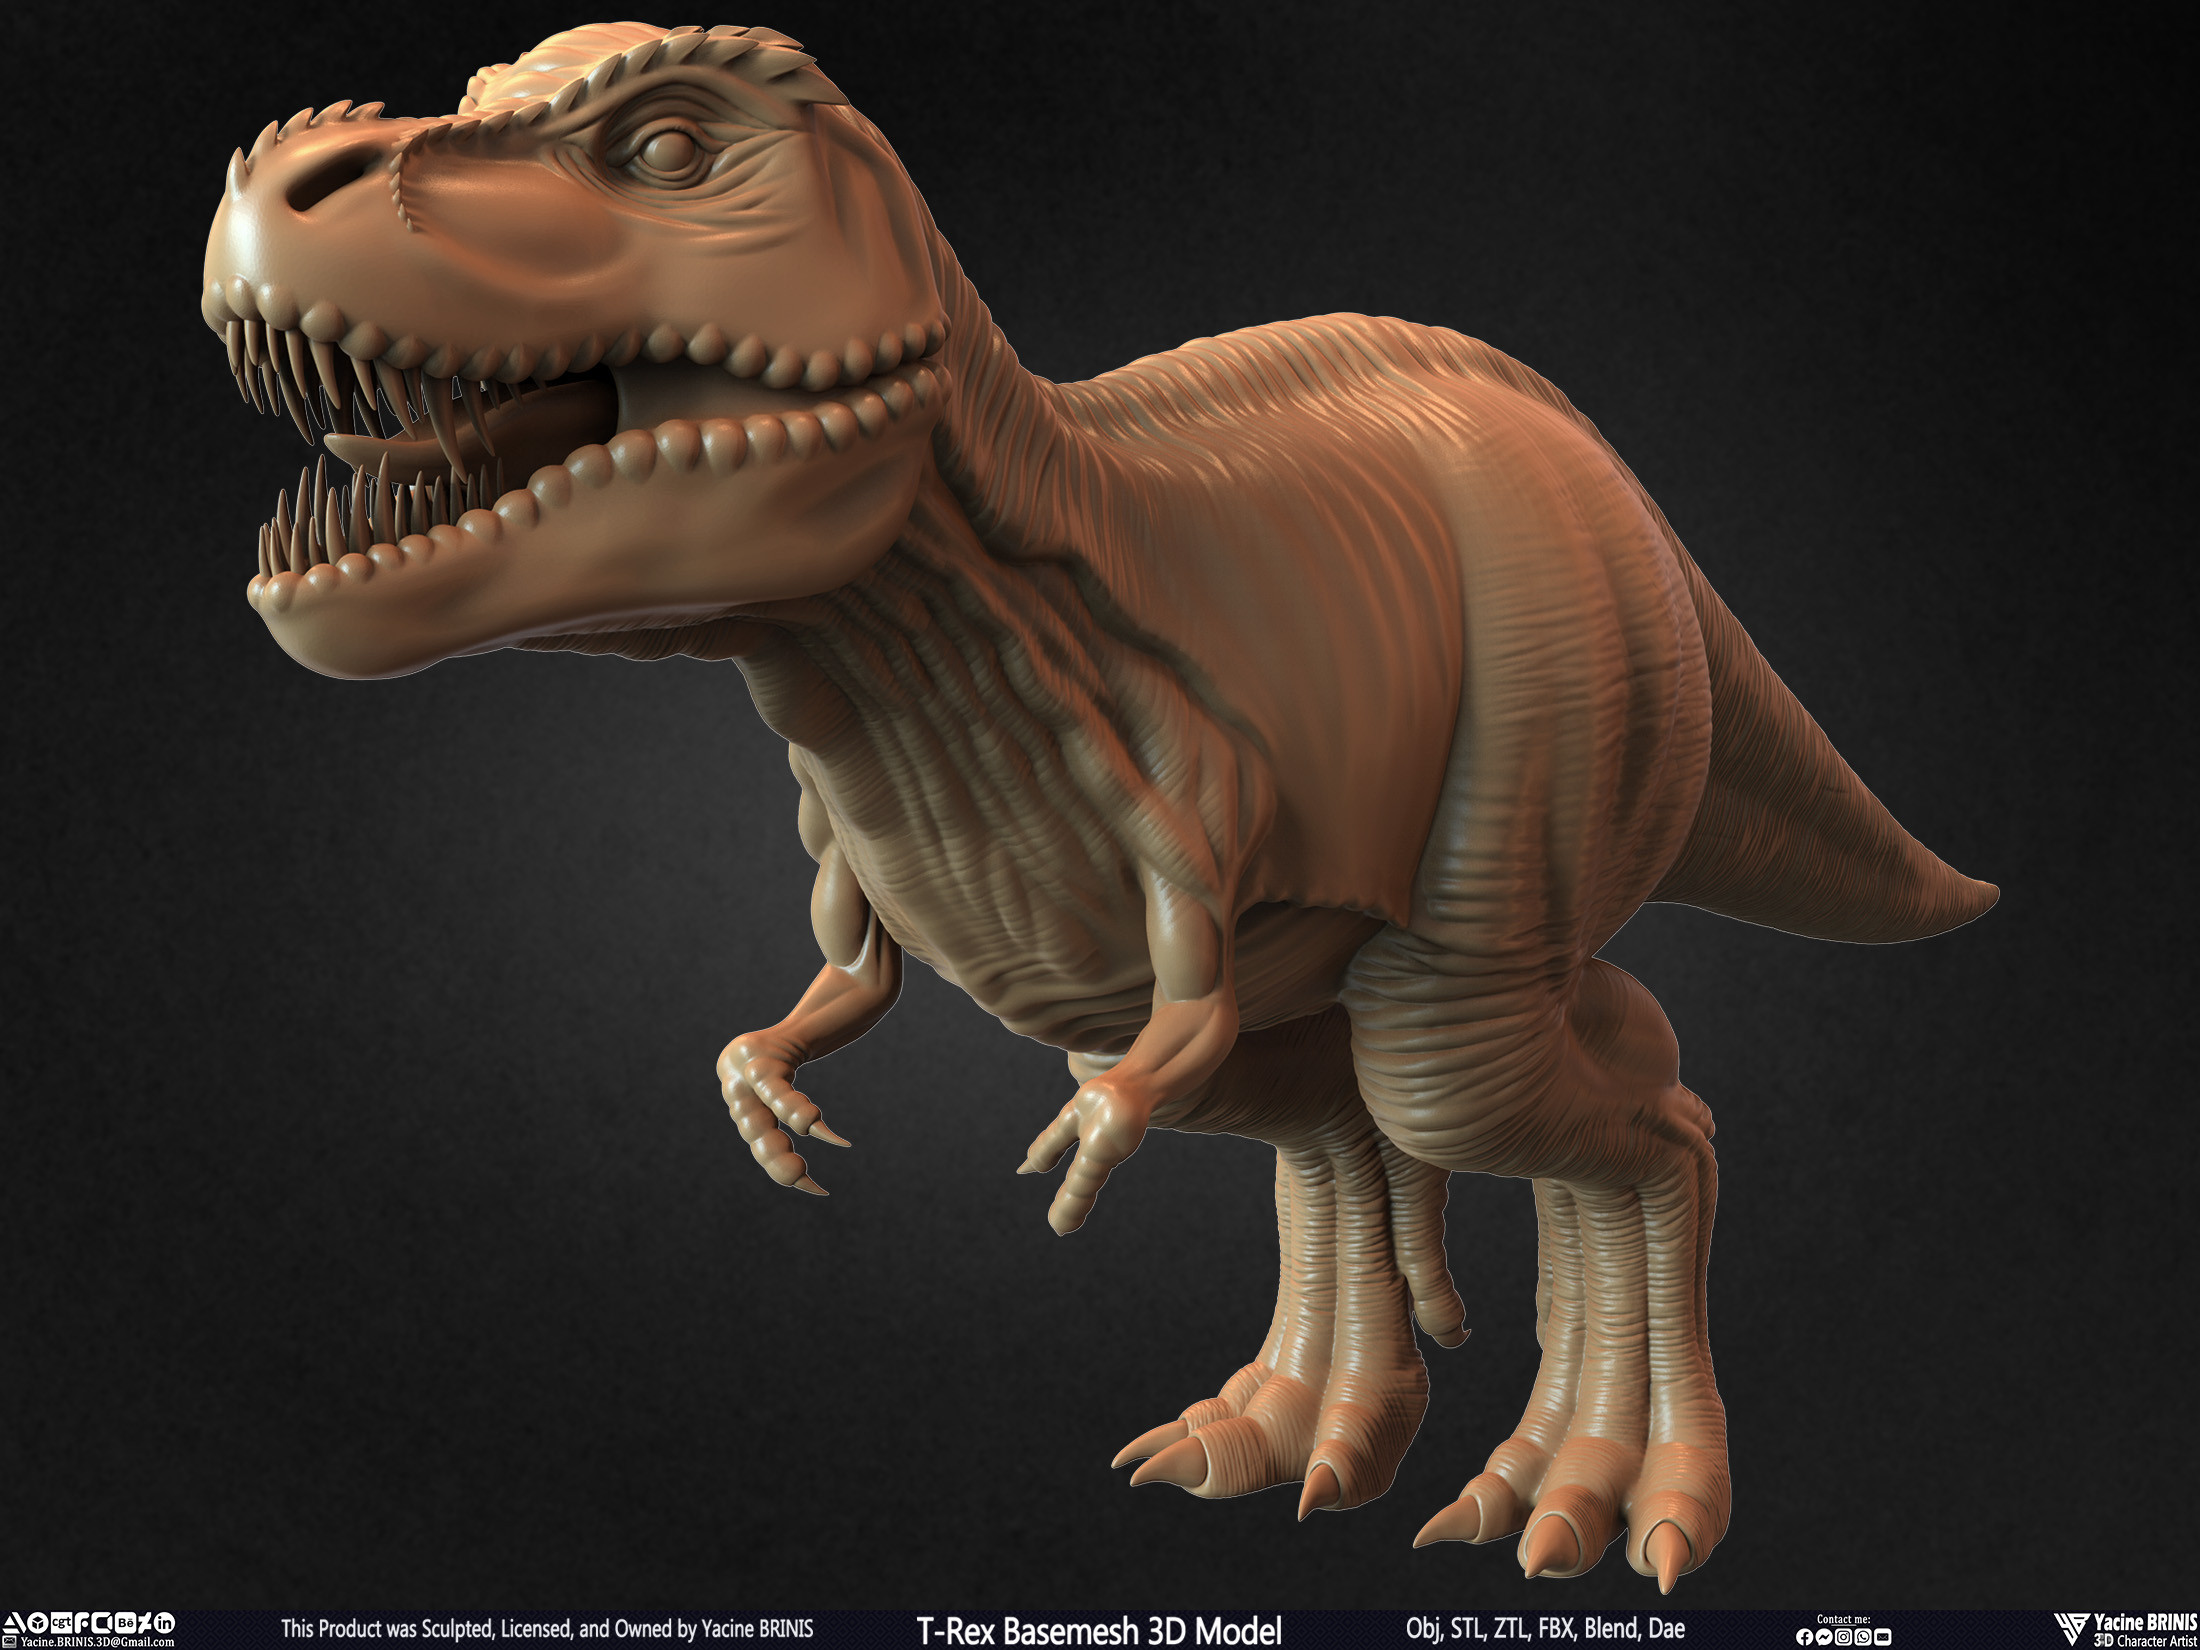 T-Rex Basemesh 3D Model (Tyrannosaurus Rex) Sculpted By Yacine BRINIS Set 010